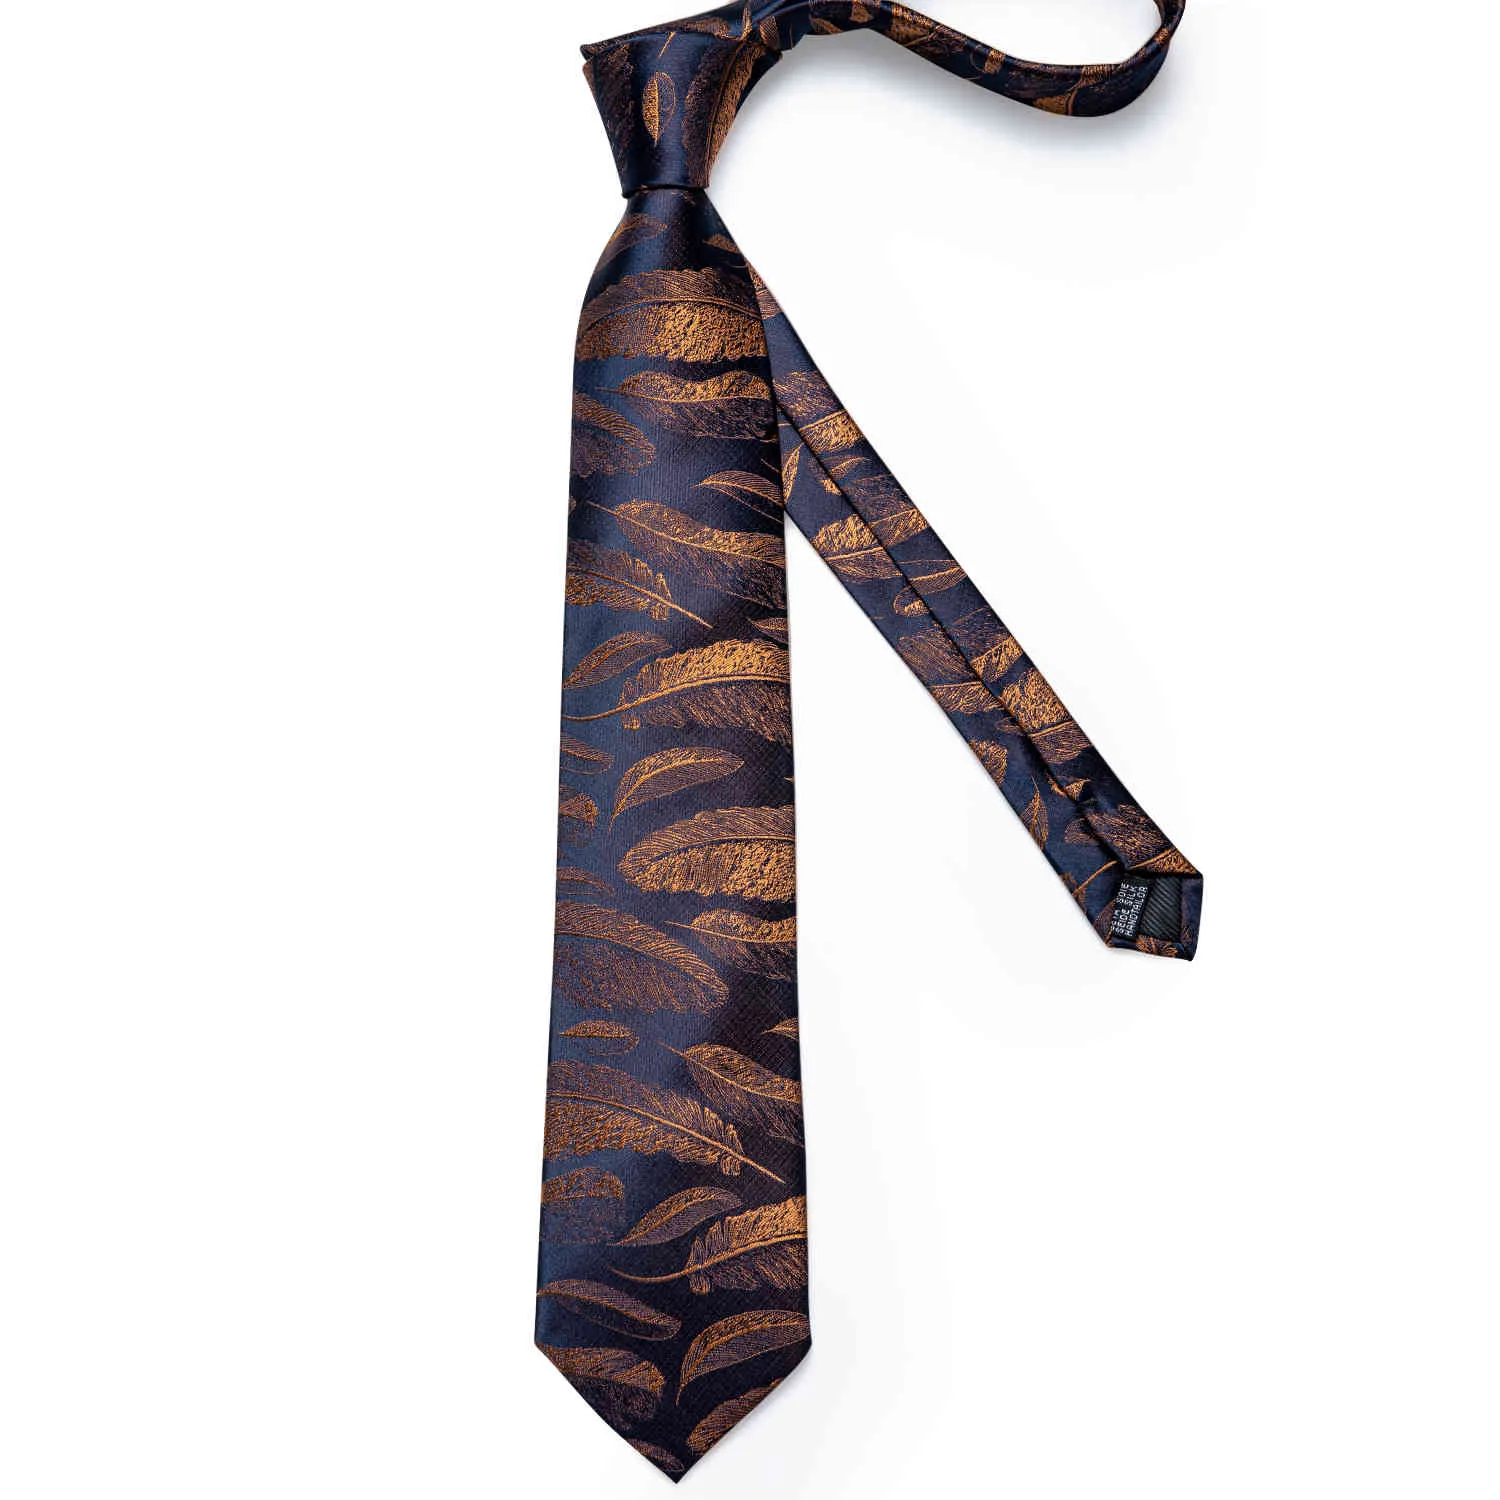 8cm Fashion Gold Feather Print Men's Silk Ties Handkerchief Cufflinks Set Business Party Necktie Gravatas Gift For Men DiBanG291O